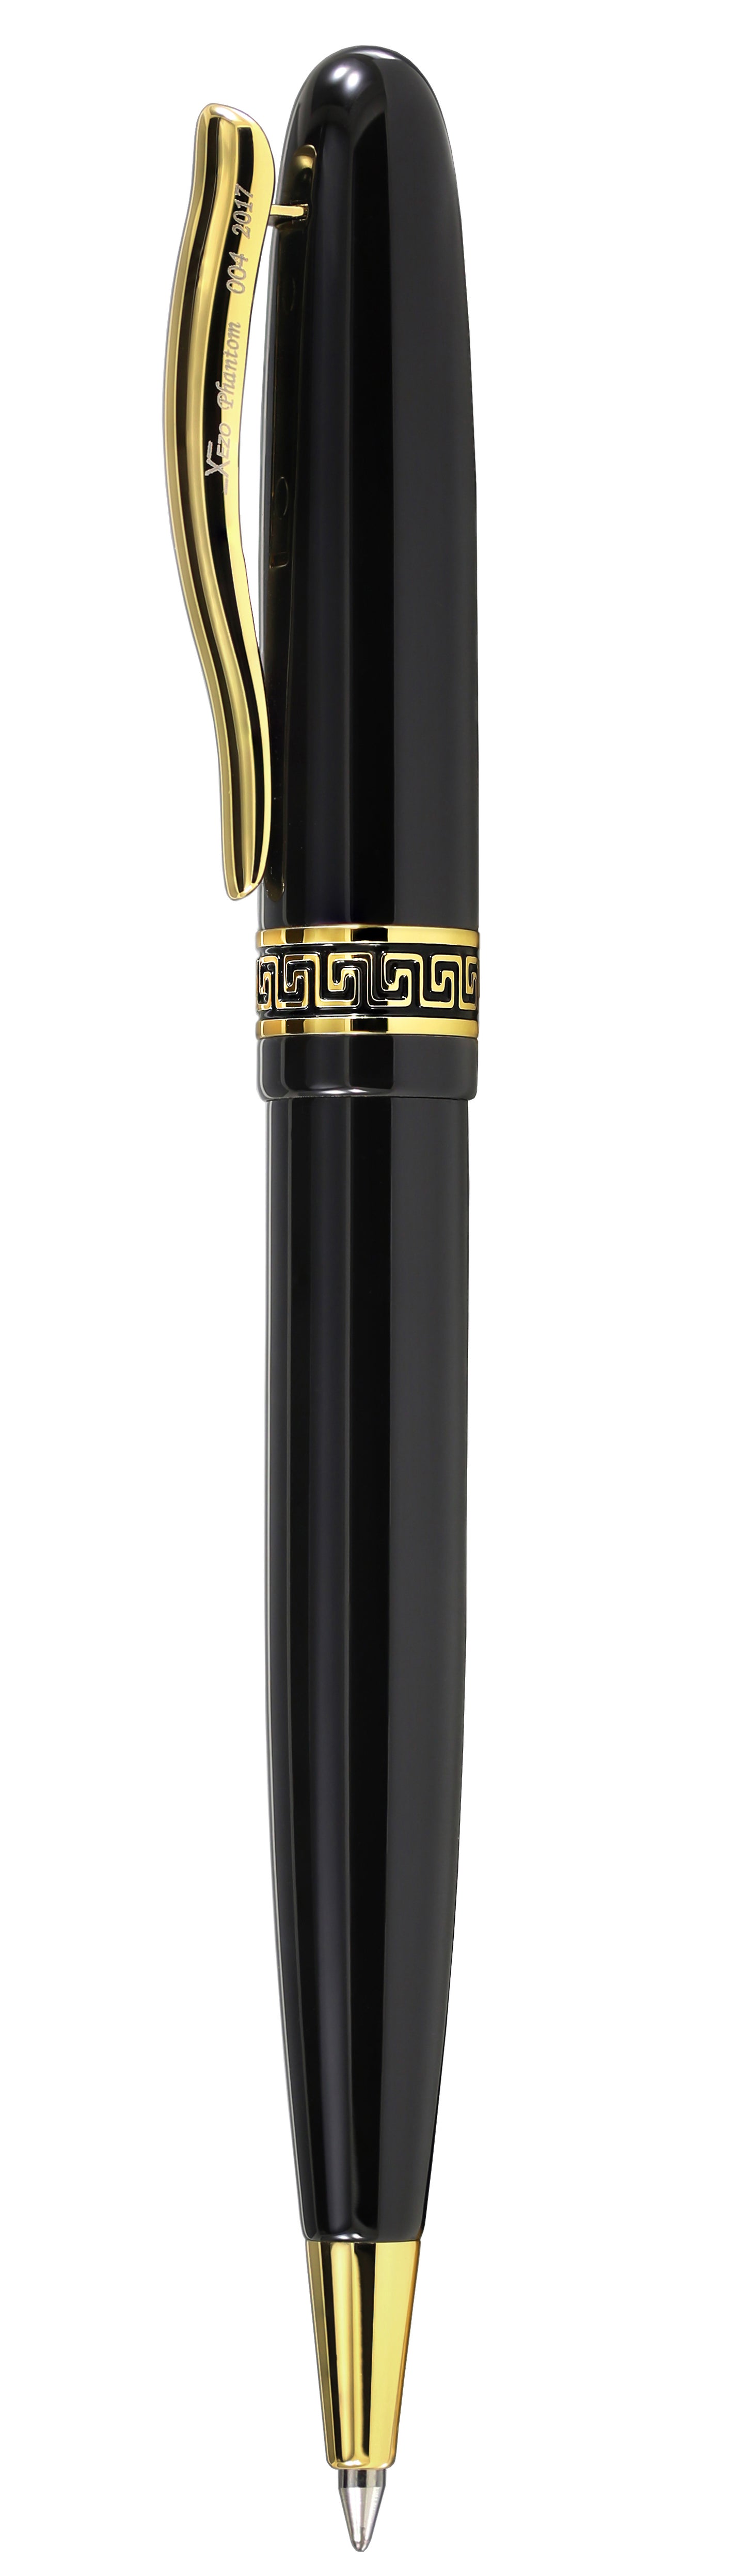 Xezo - Side view of the Phantom Classic Black B ballpoint pen